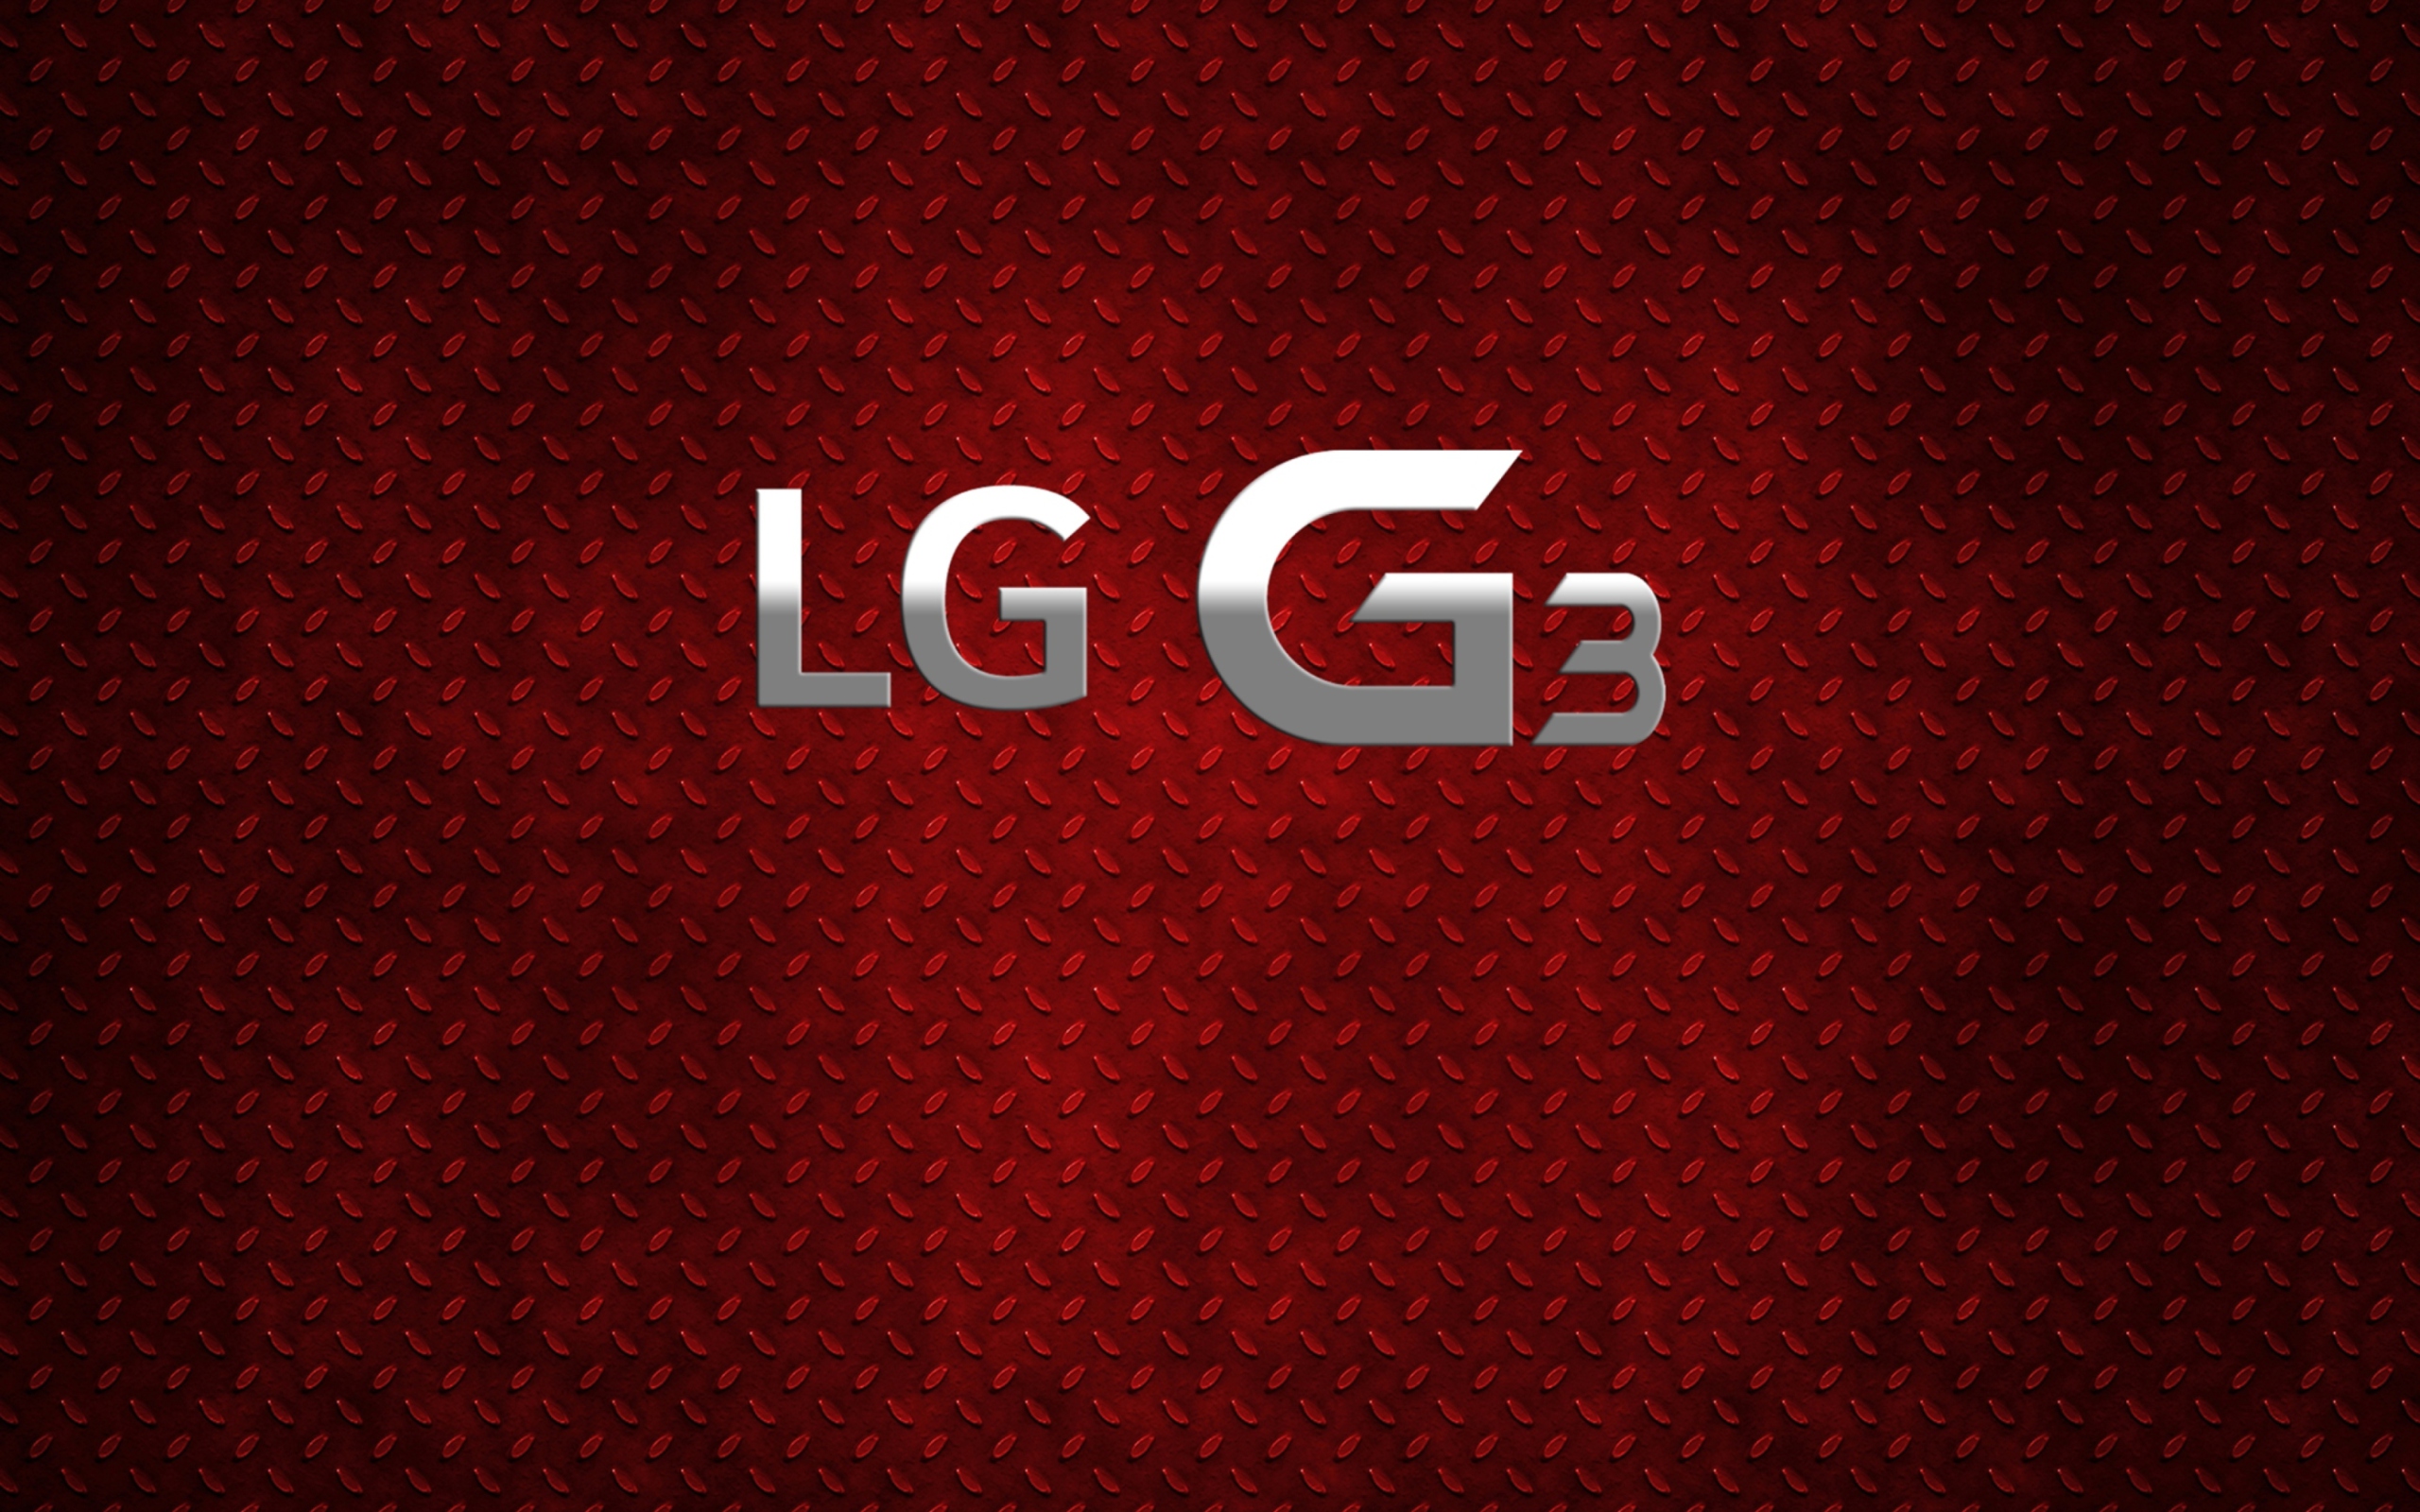 LG G3 wallpaper 2560x1600